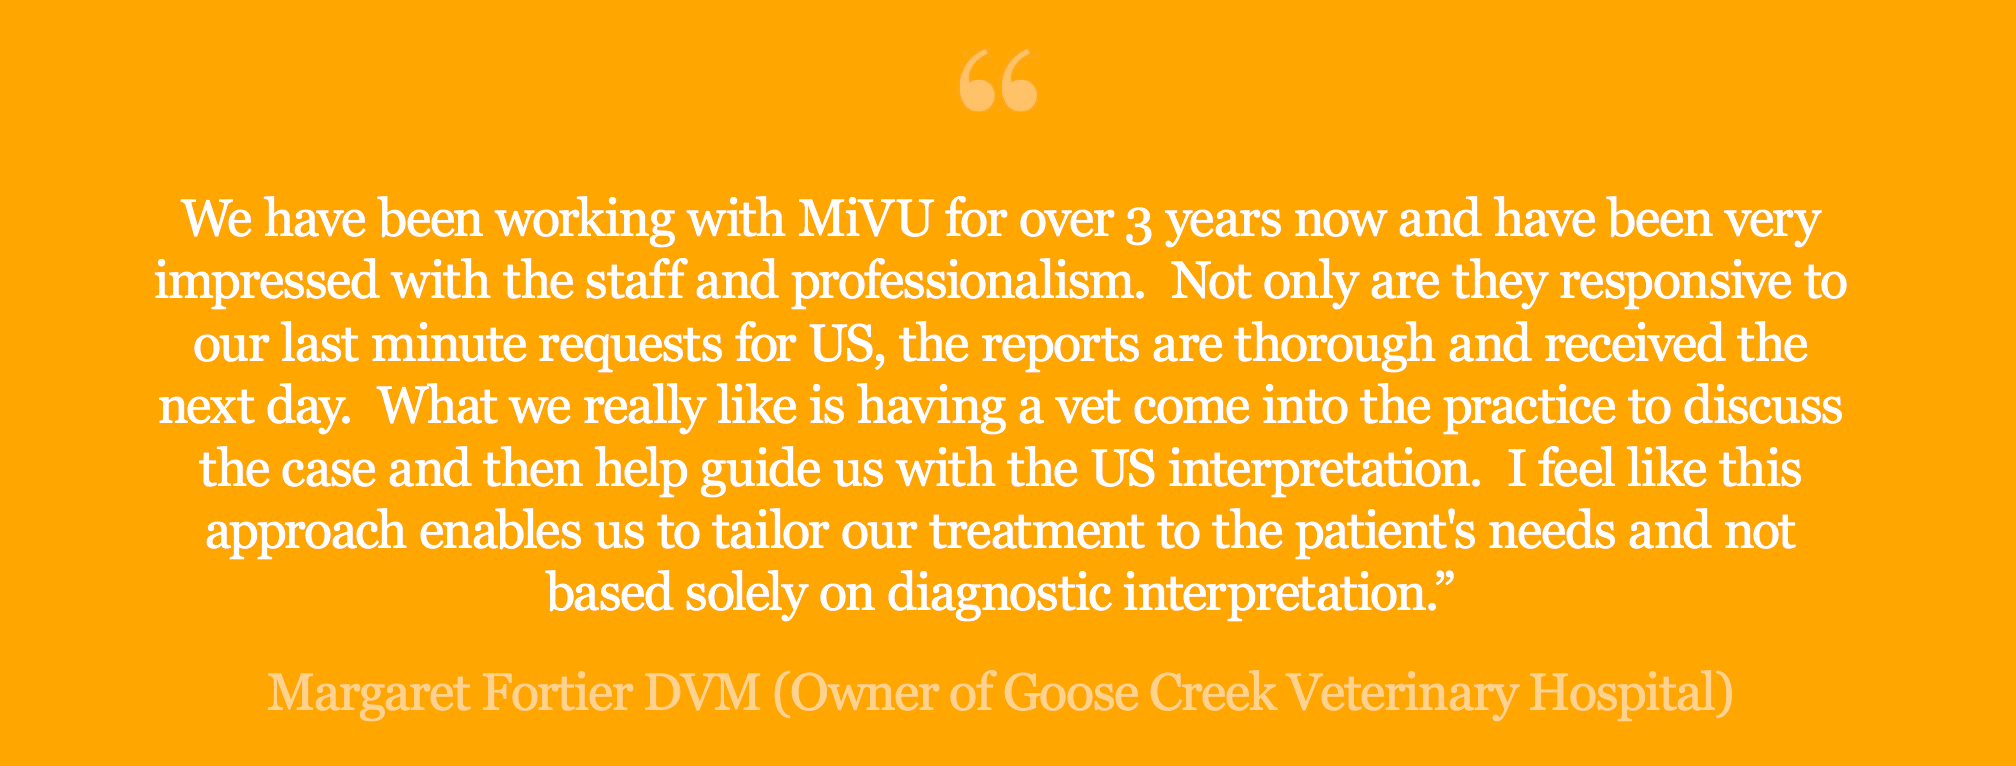 Margaret Fortier DVM (Owner of Goose Creek Veterinary Hospital) (Copy)